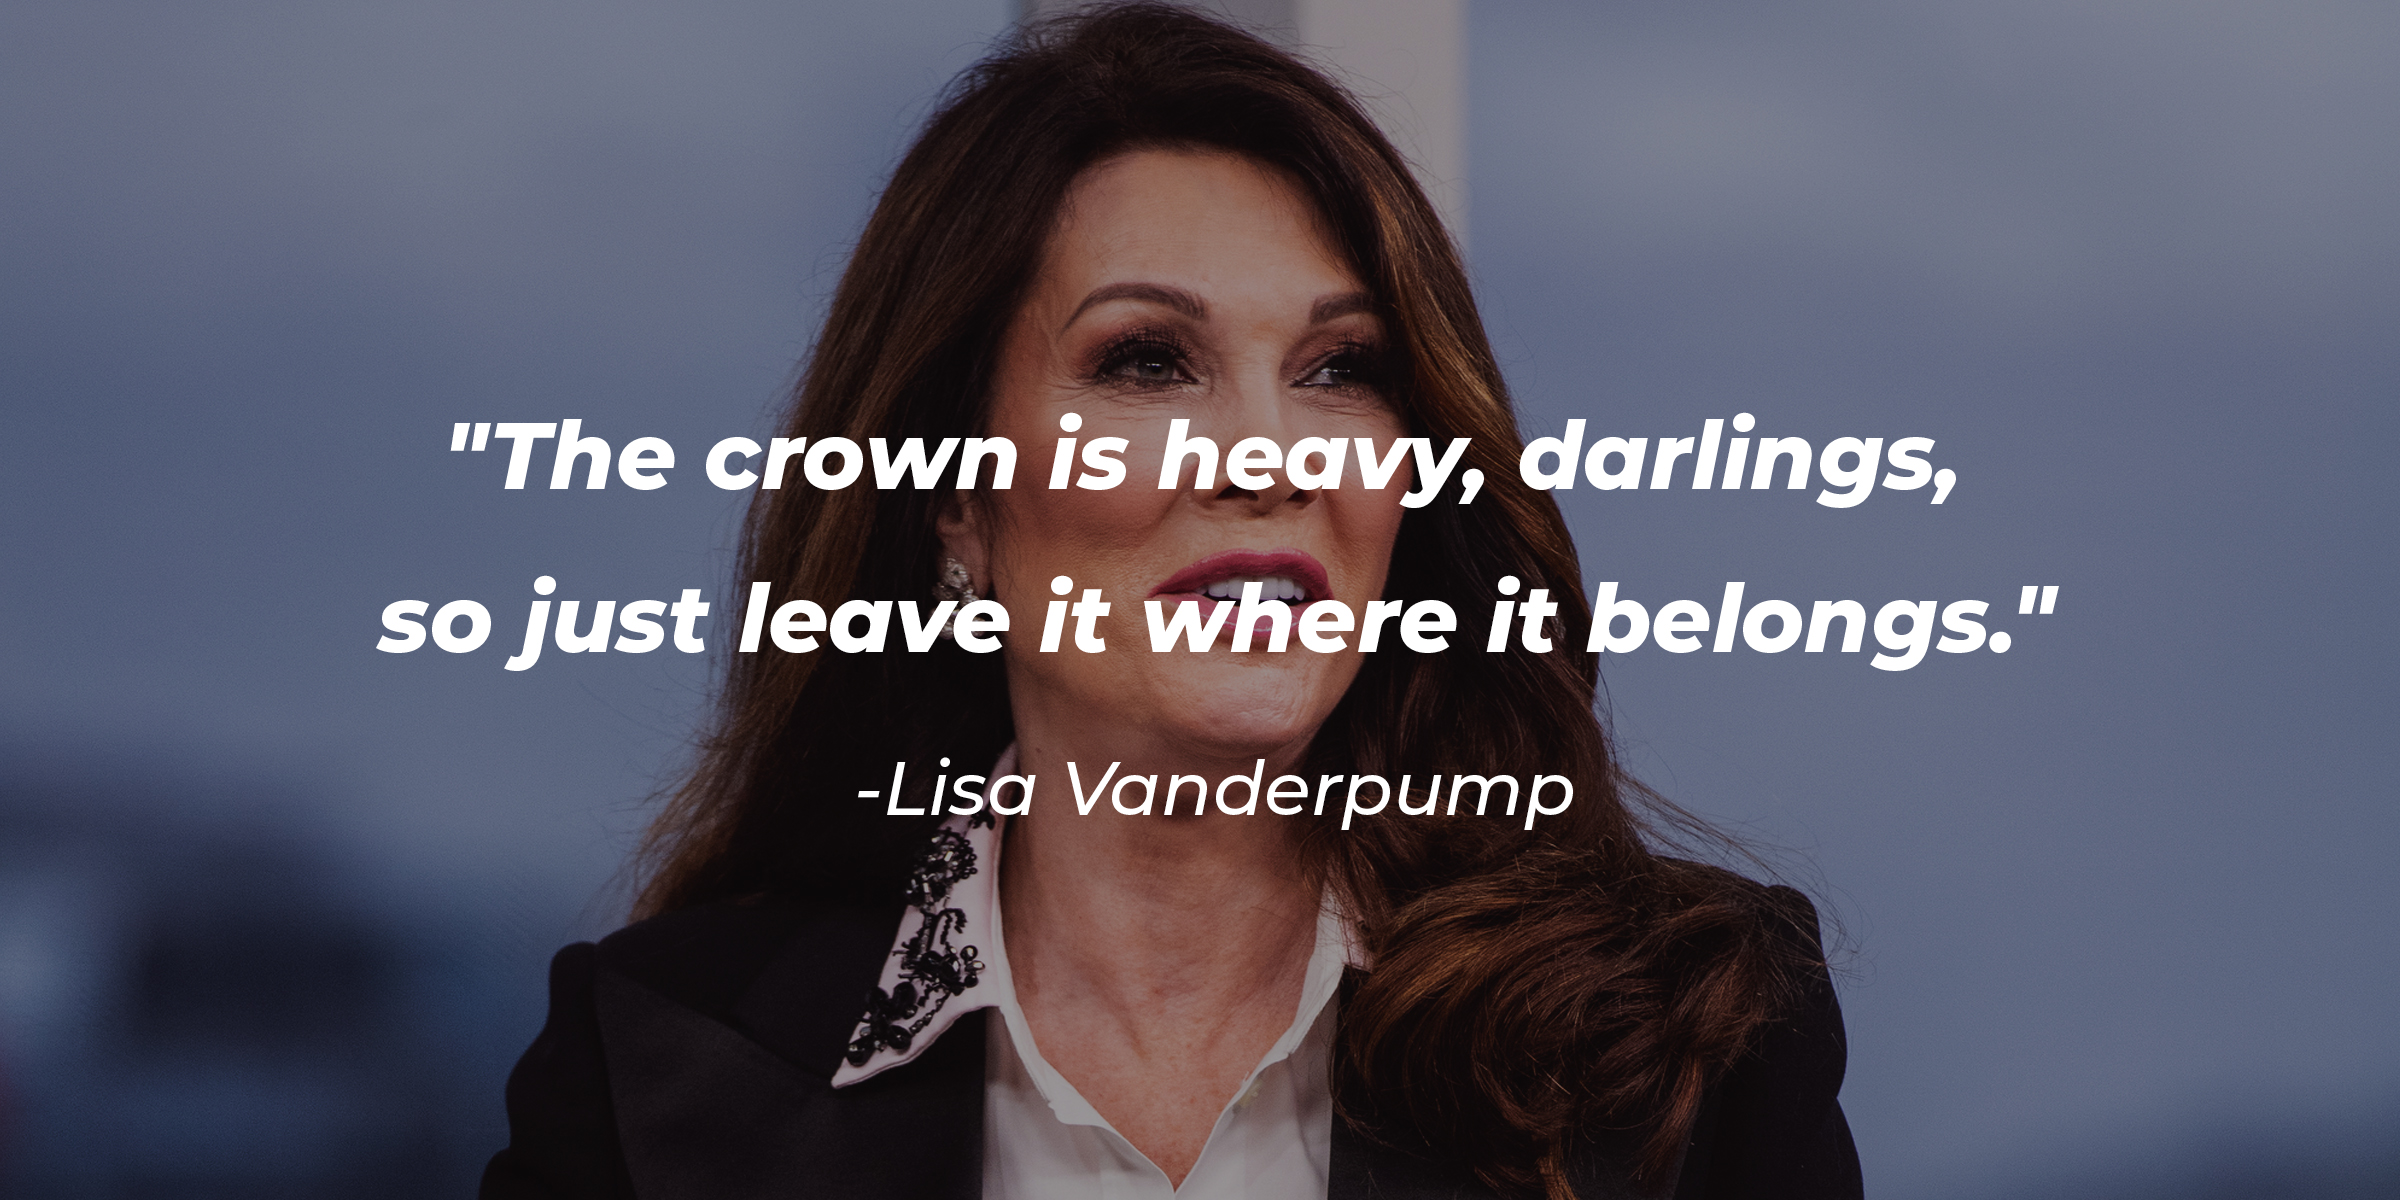 Lisa Vanderpump, with her quote: "The crown is heavy, darlings, so just leave it where it belongs." | Source: Getty Images